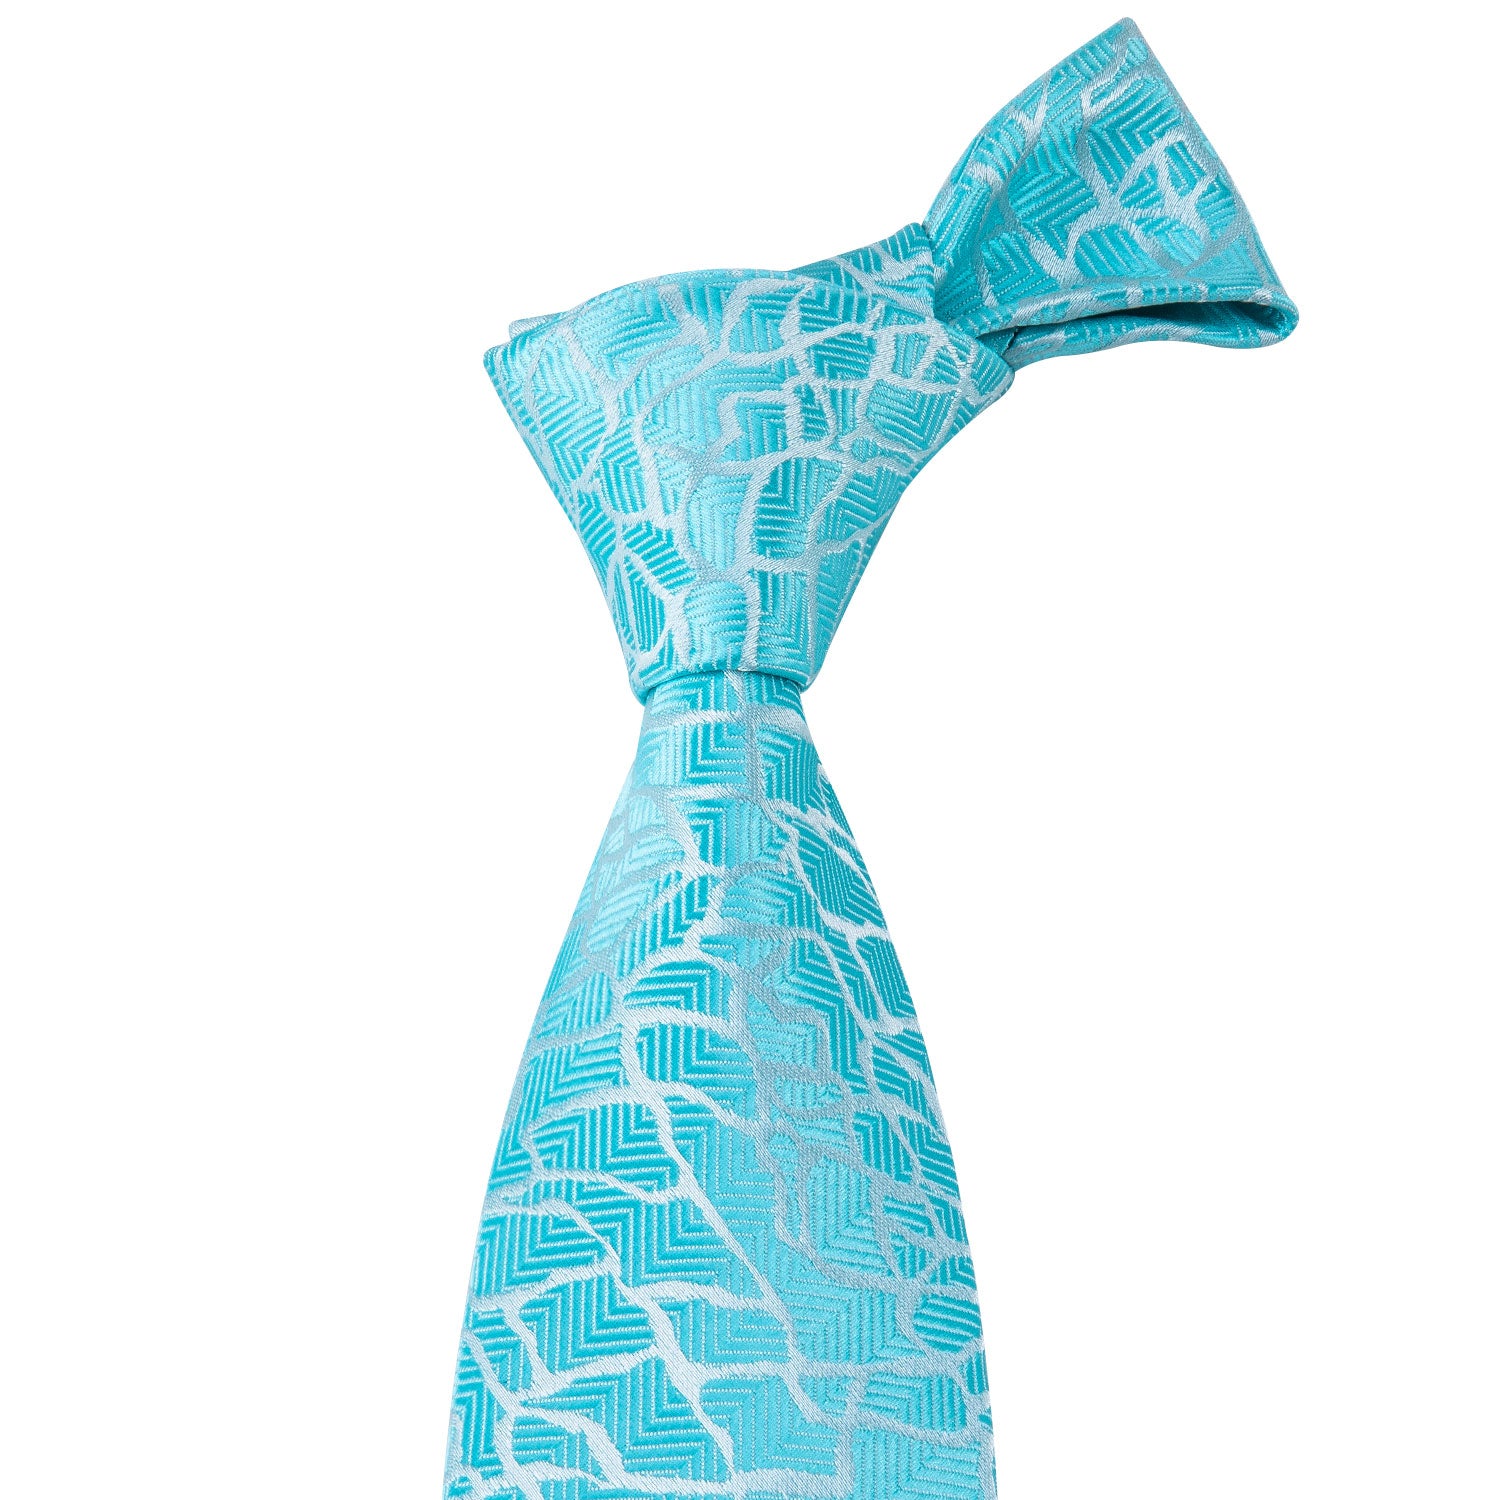 Turquoise Blue Novelty Silk Men's Tie Hanky Cufflinks Set